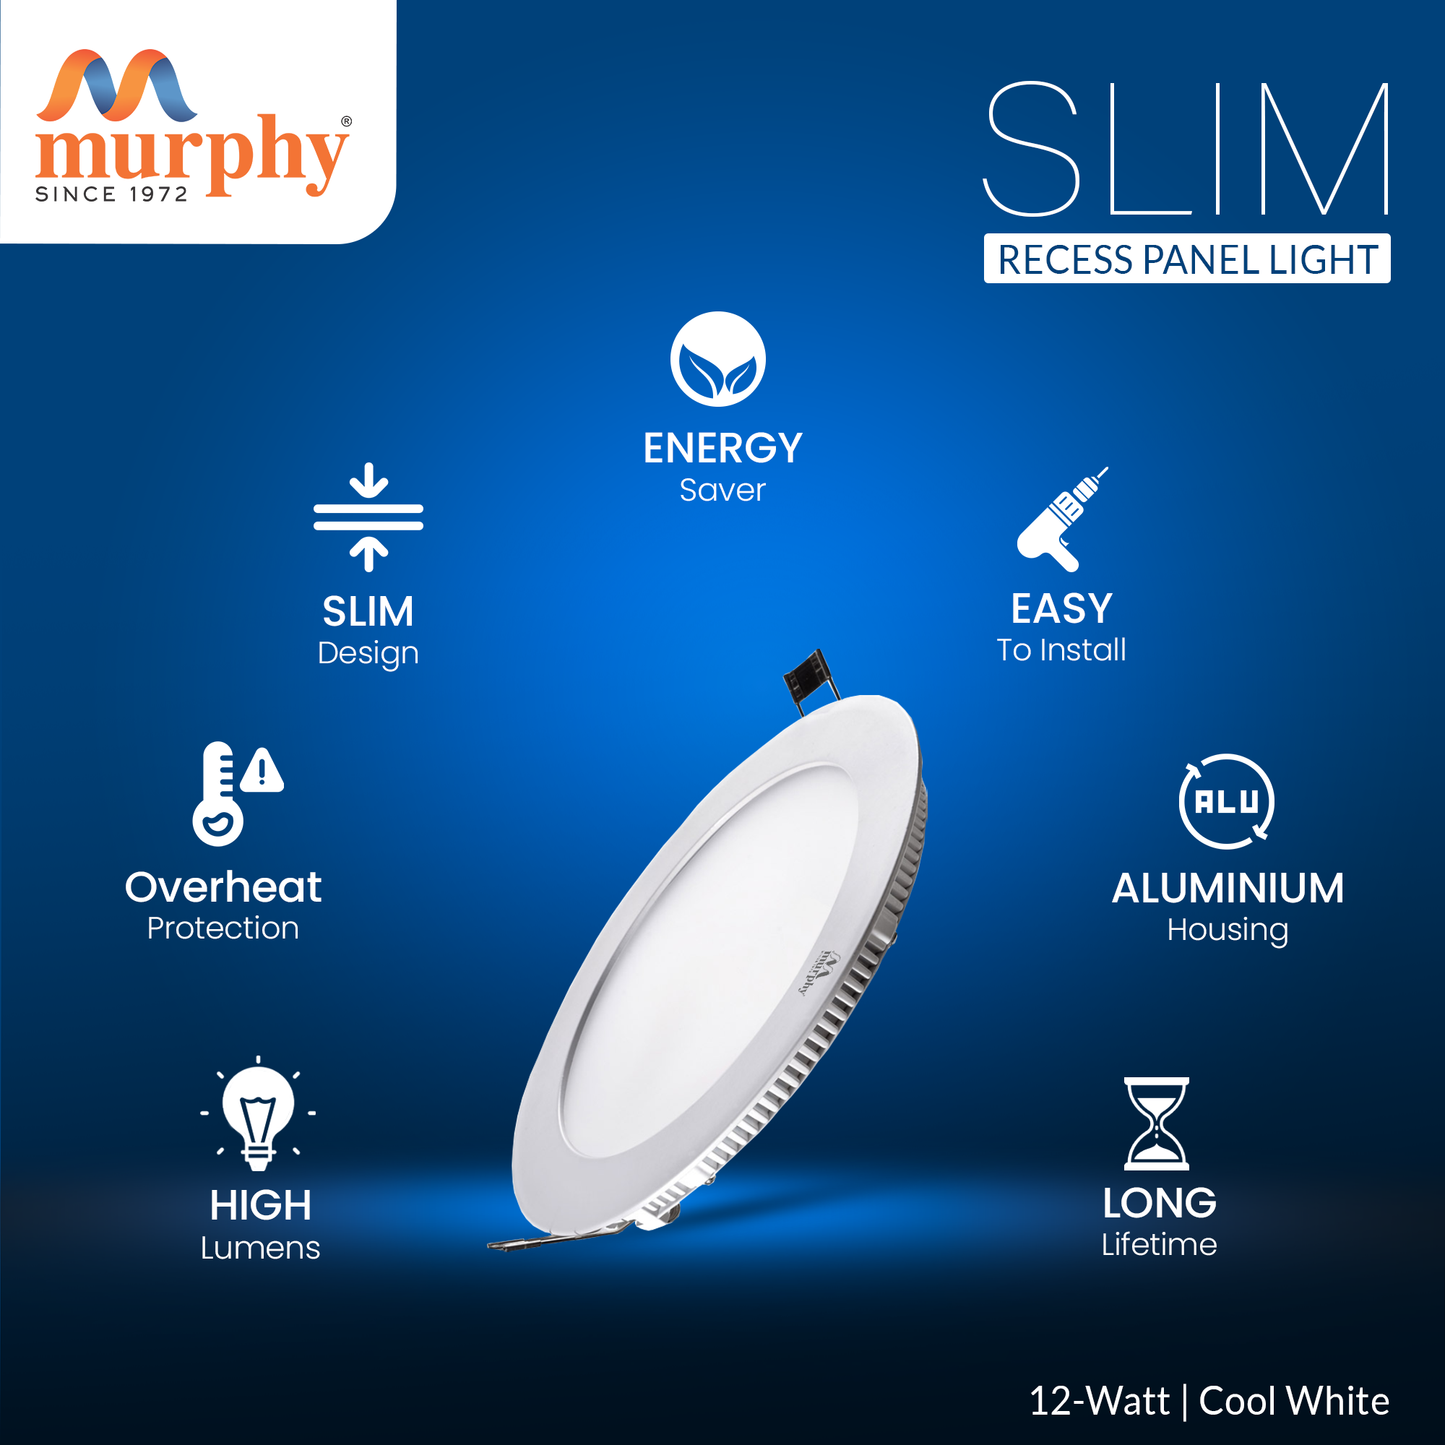 Murphy 12W Slim Round Recess Panel Light